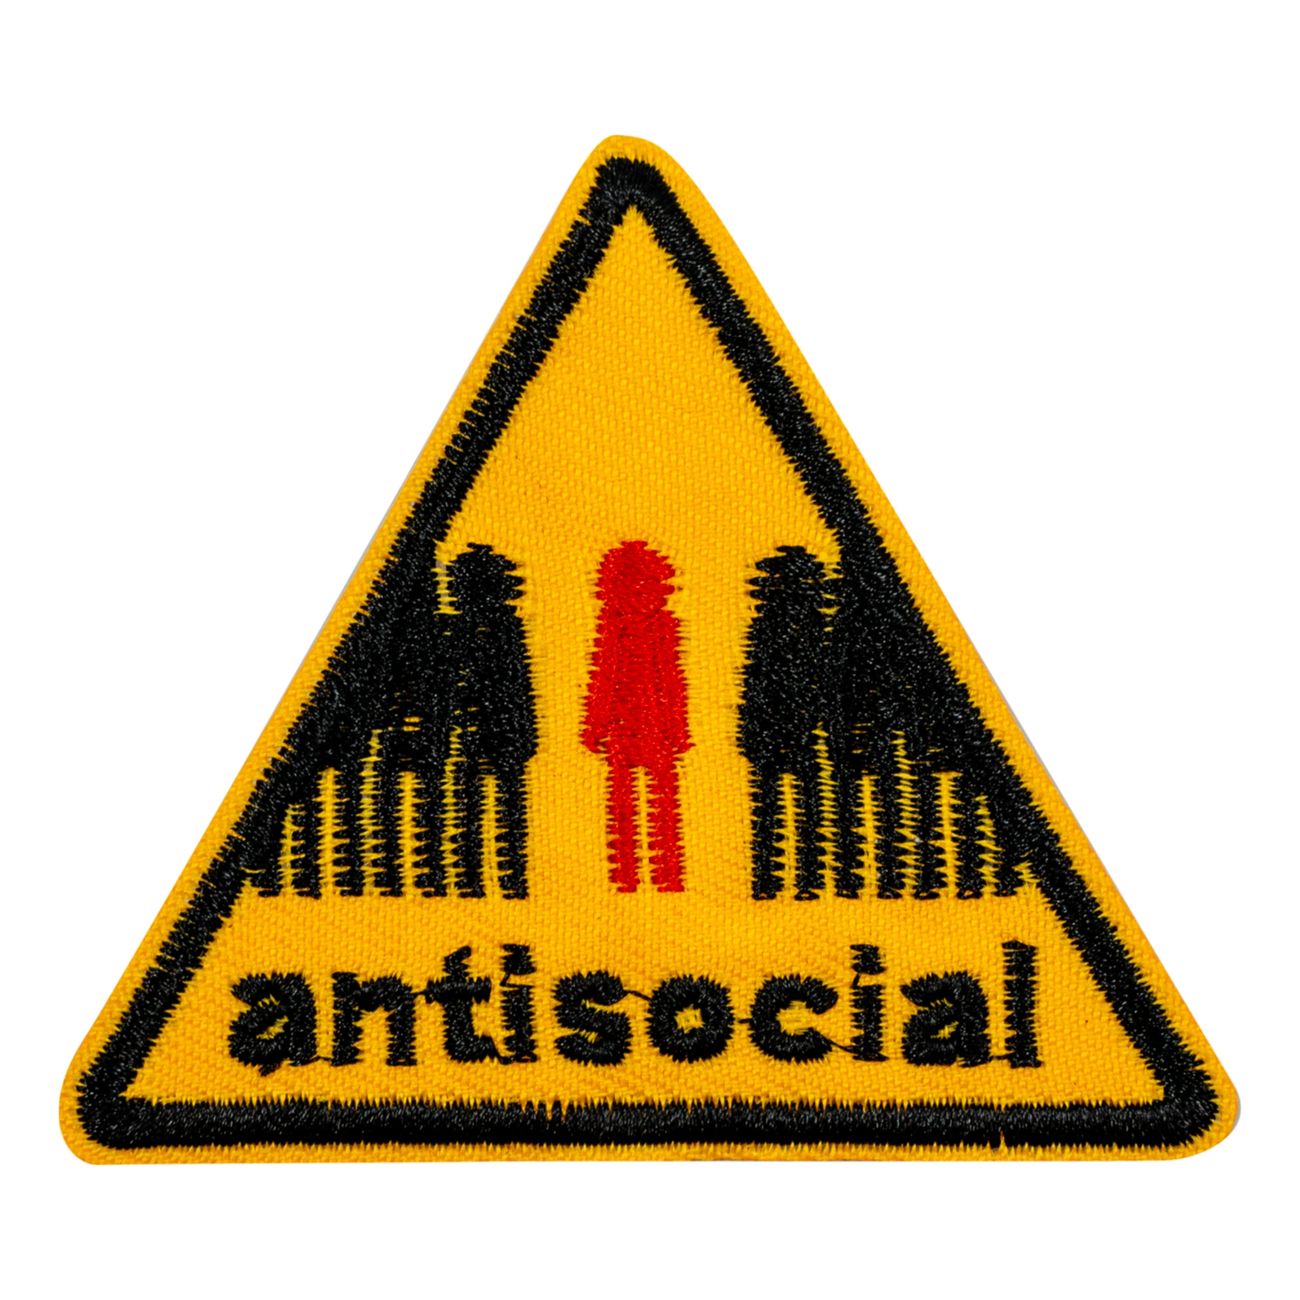 tygmarke-antisocial-yellow-sign-99845-1